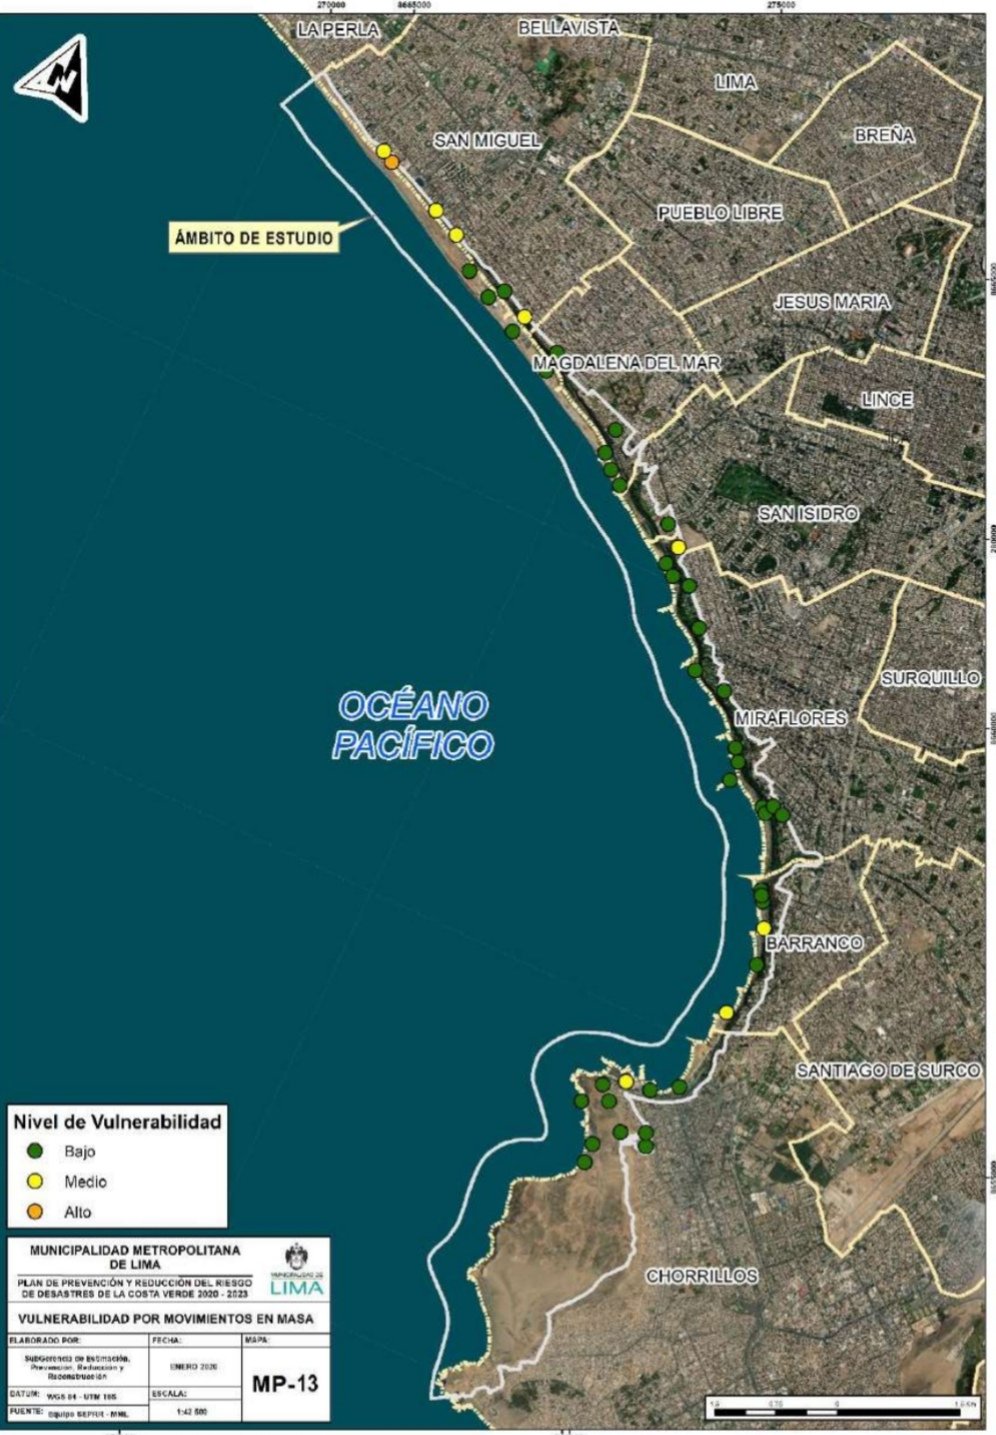 Costa Verde Map Of Risks